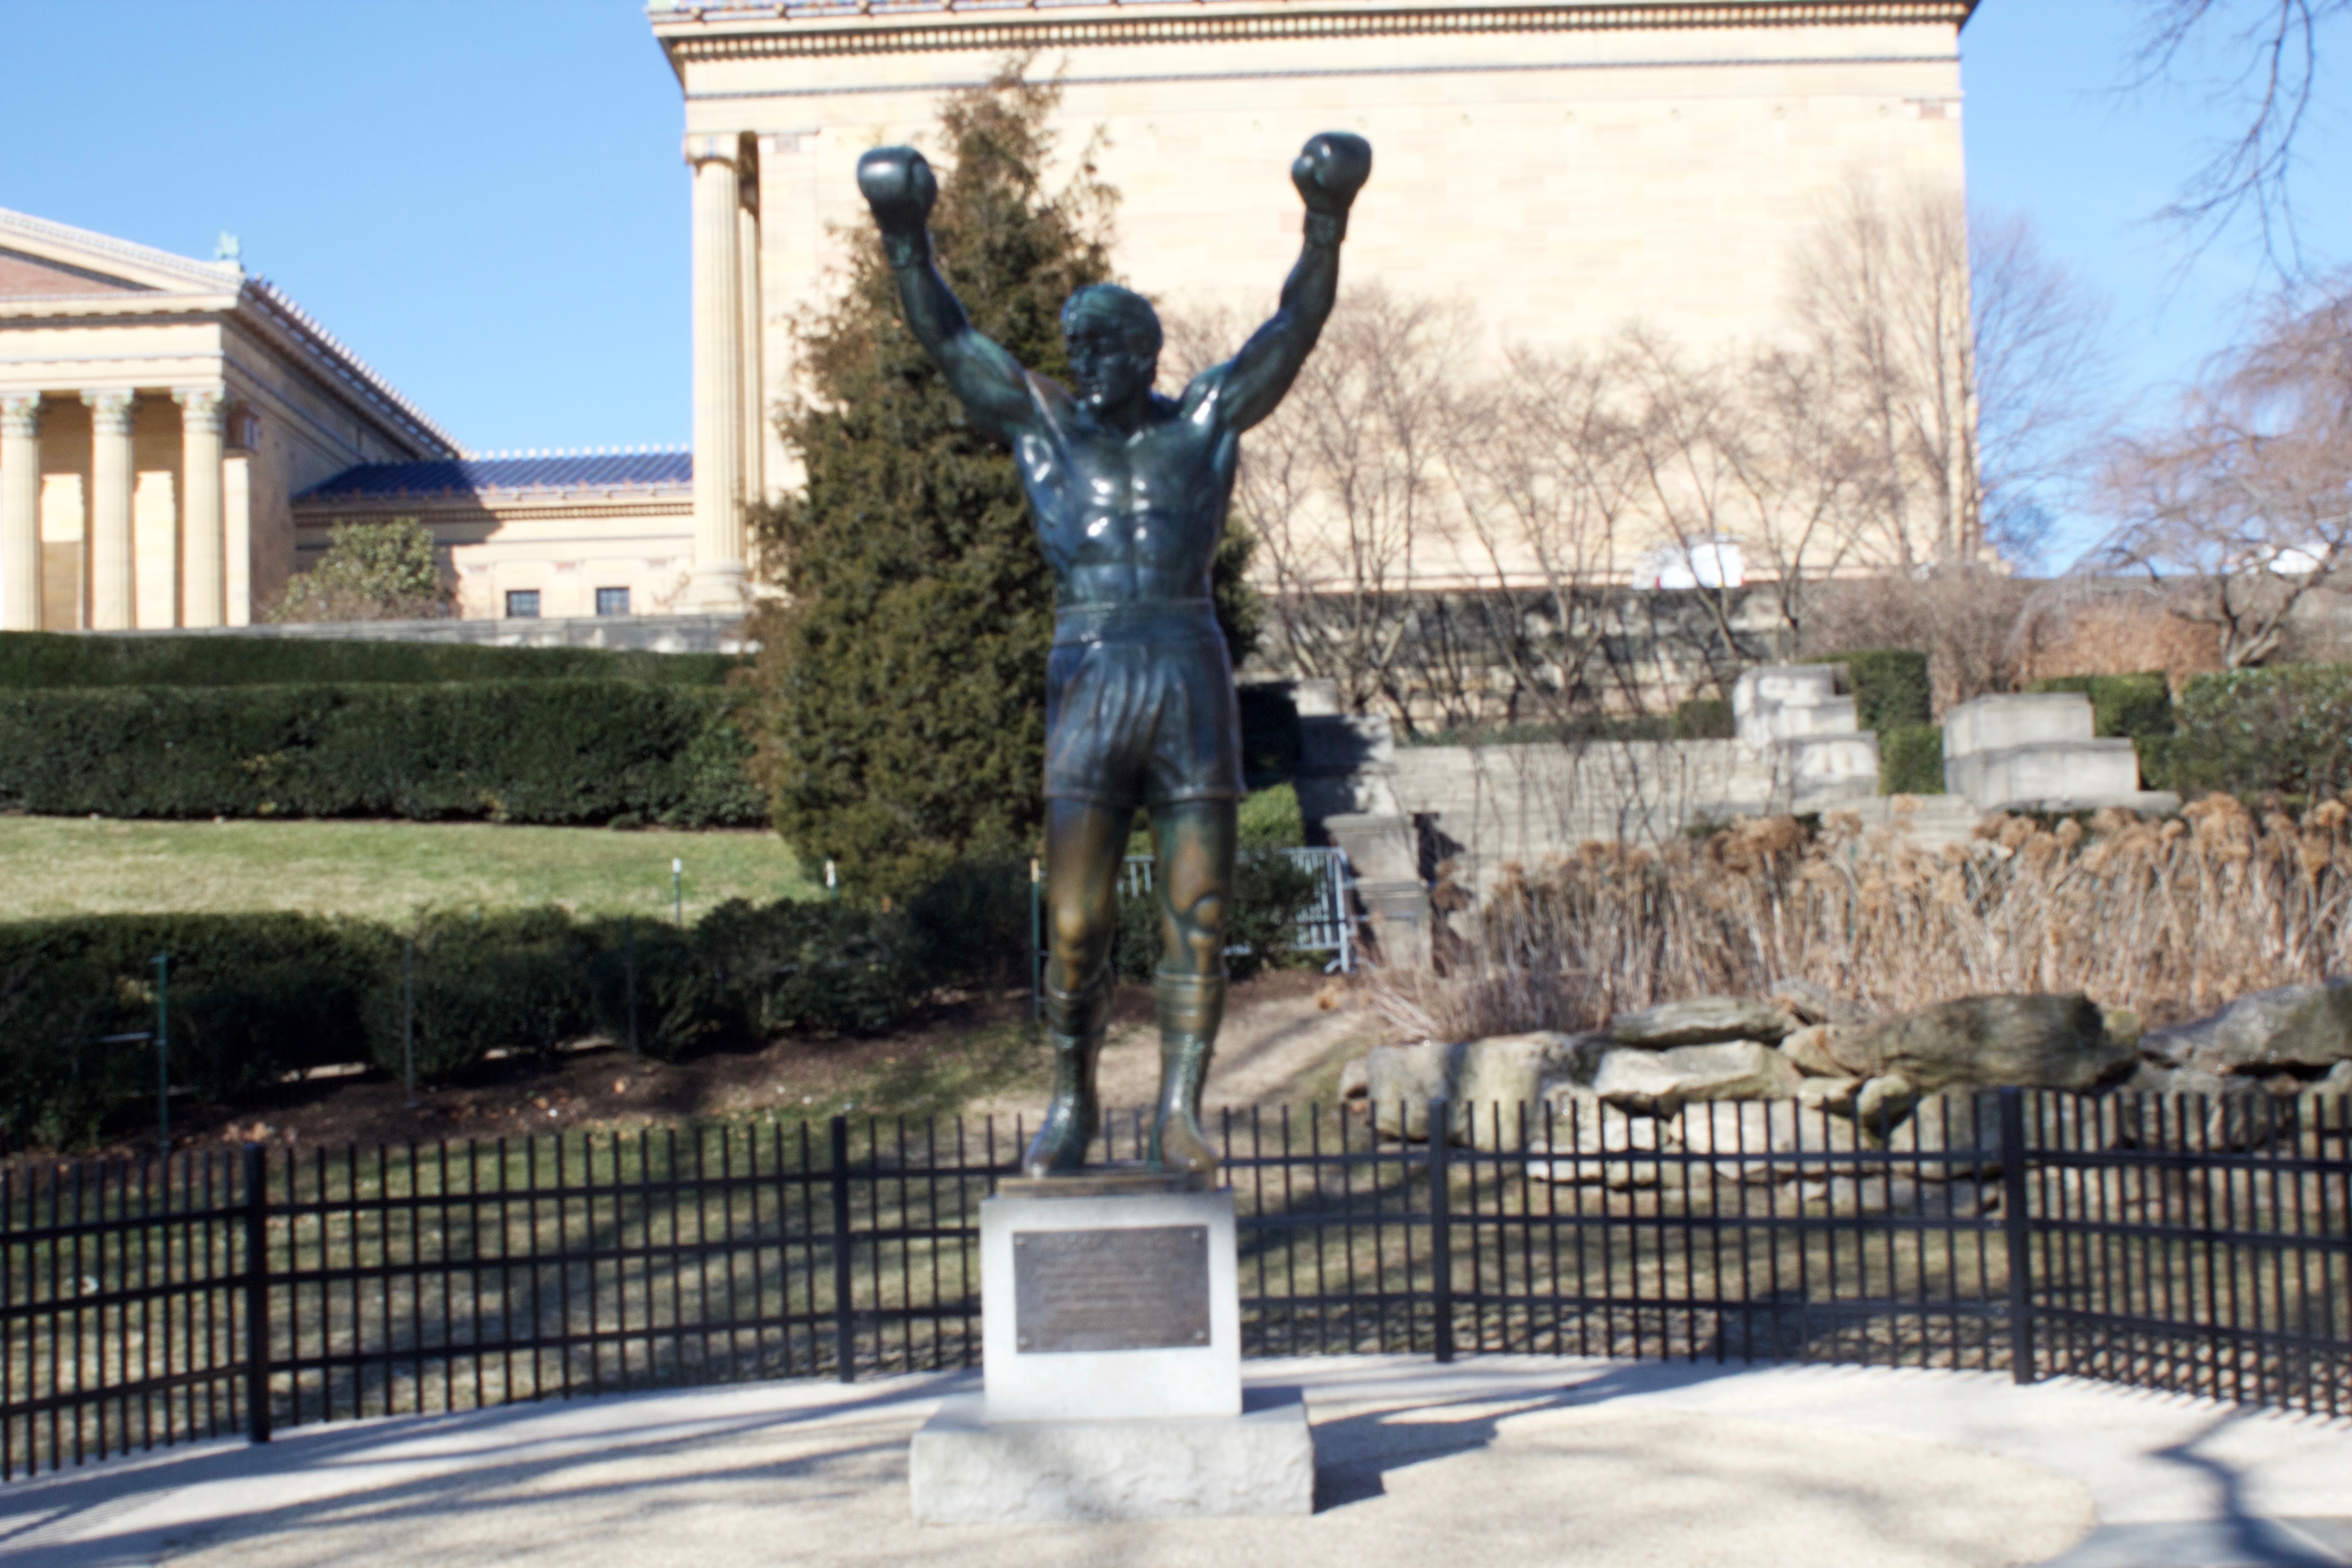 The Rocky Statue near the Philadelphia Museum of Art